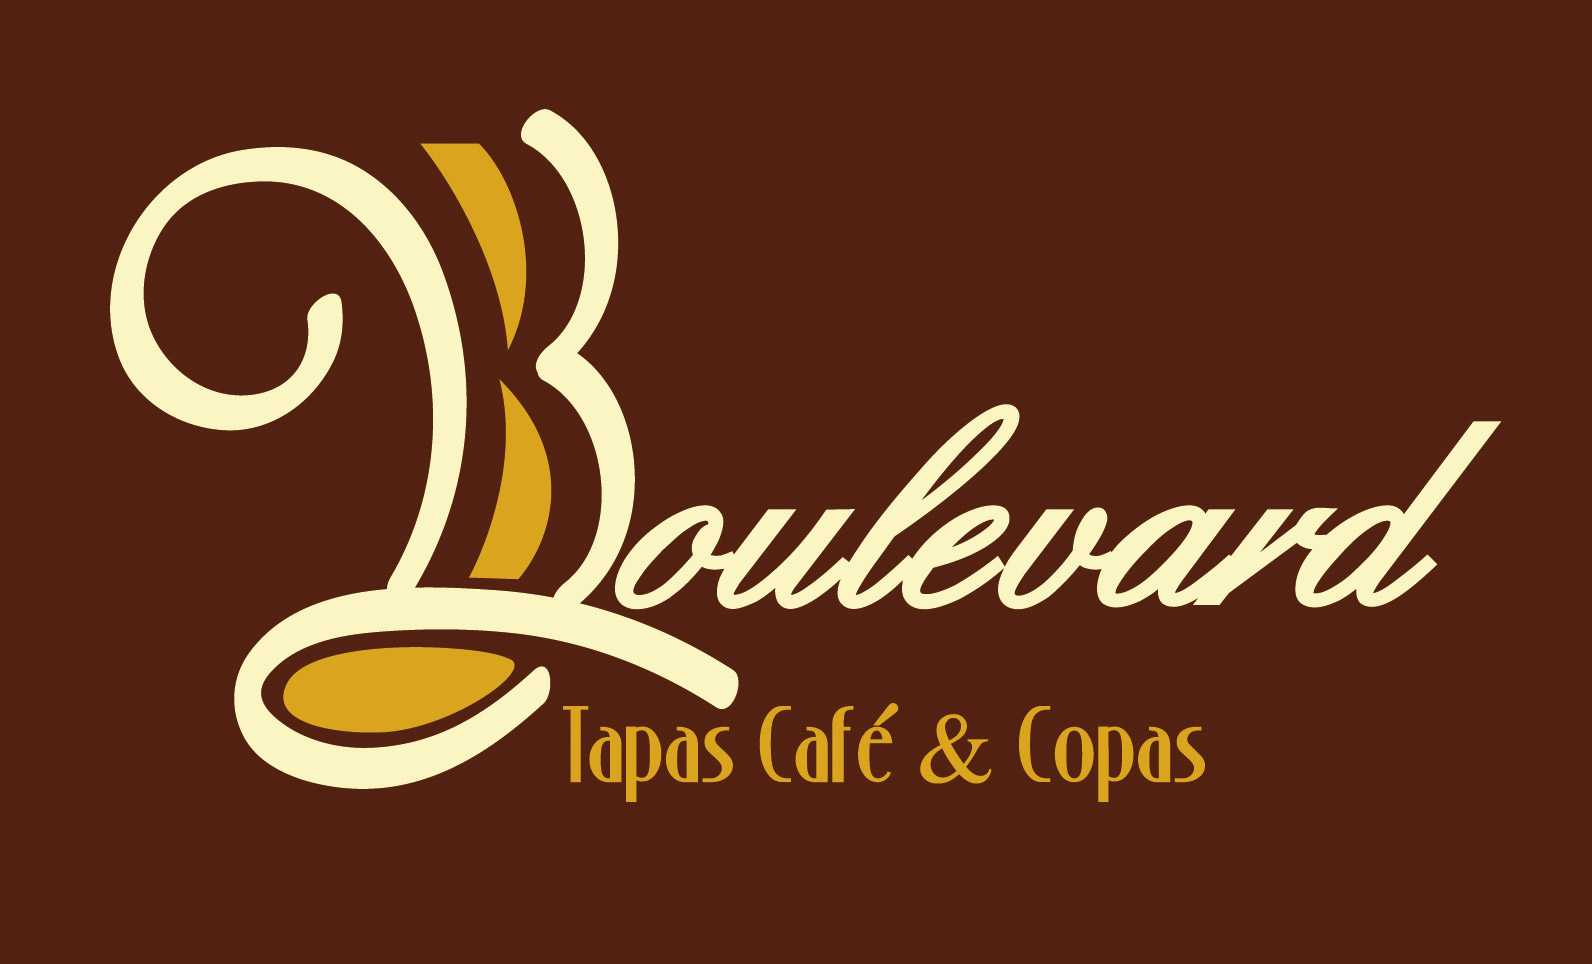 Boulevard - Tapas, café y copas